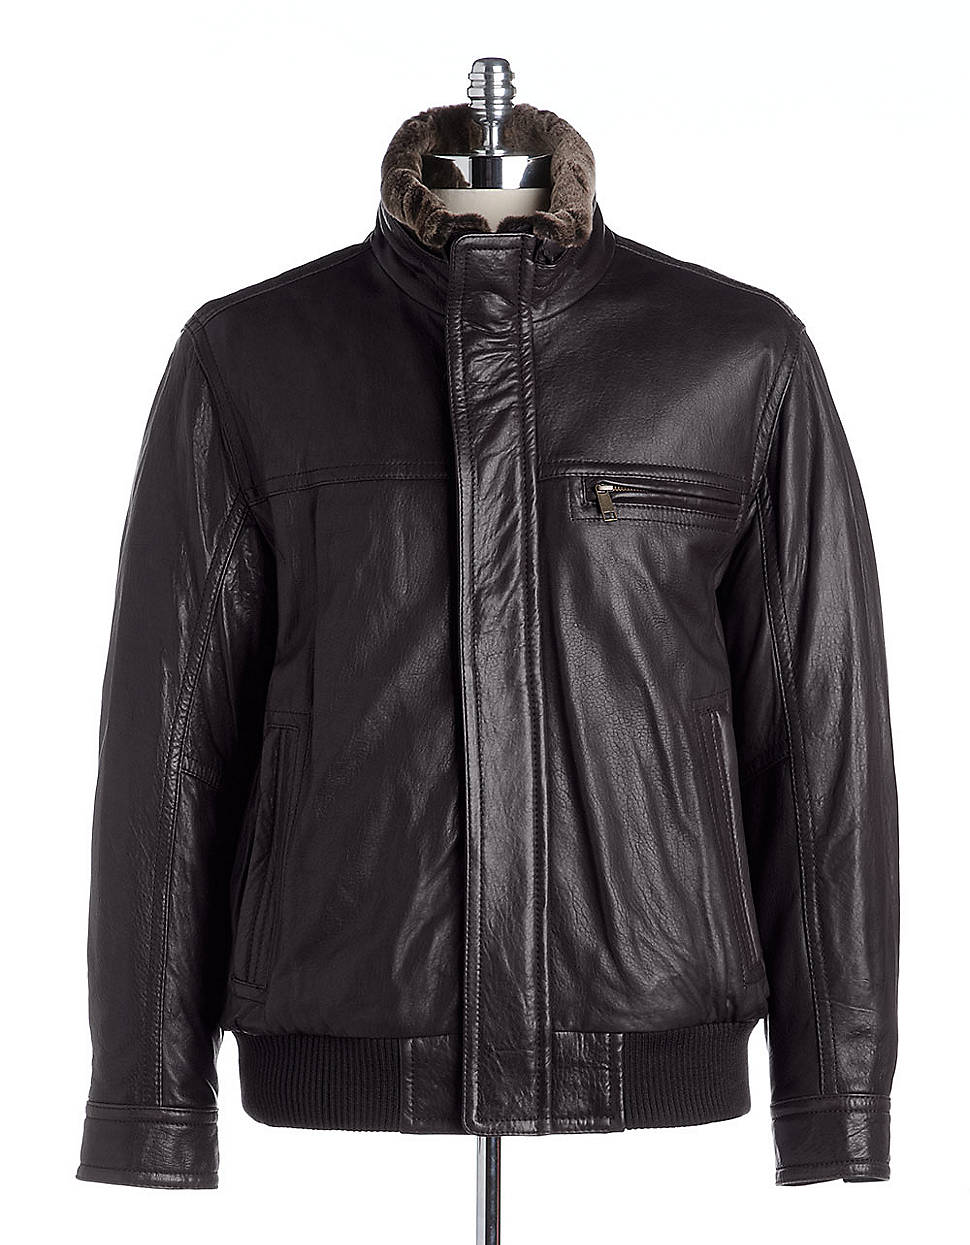 Lyst - Marc new york Fur Hood Leather Bomber Jacket in Black for Men